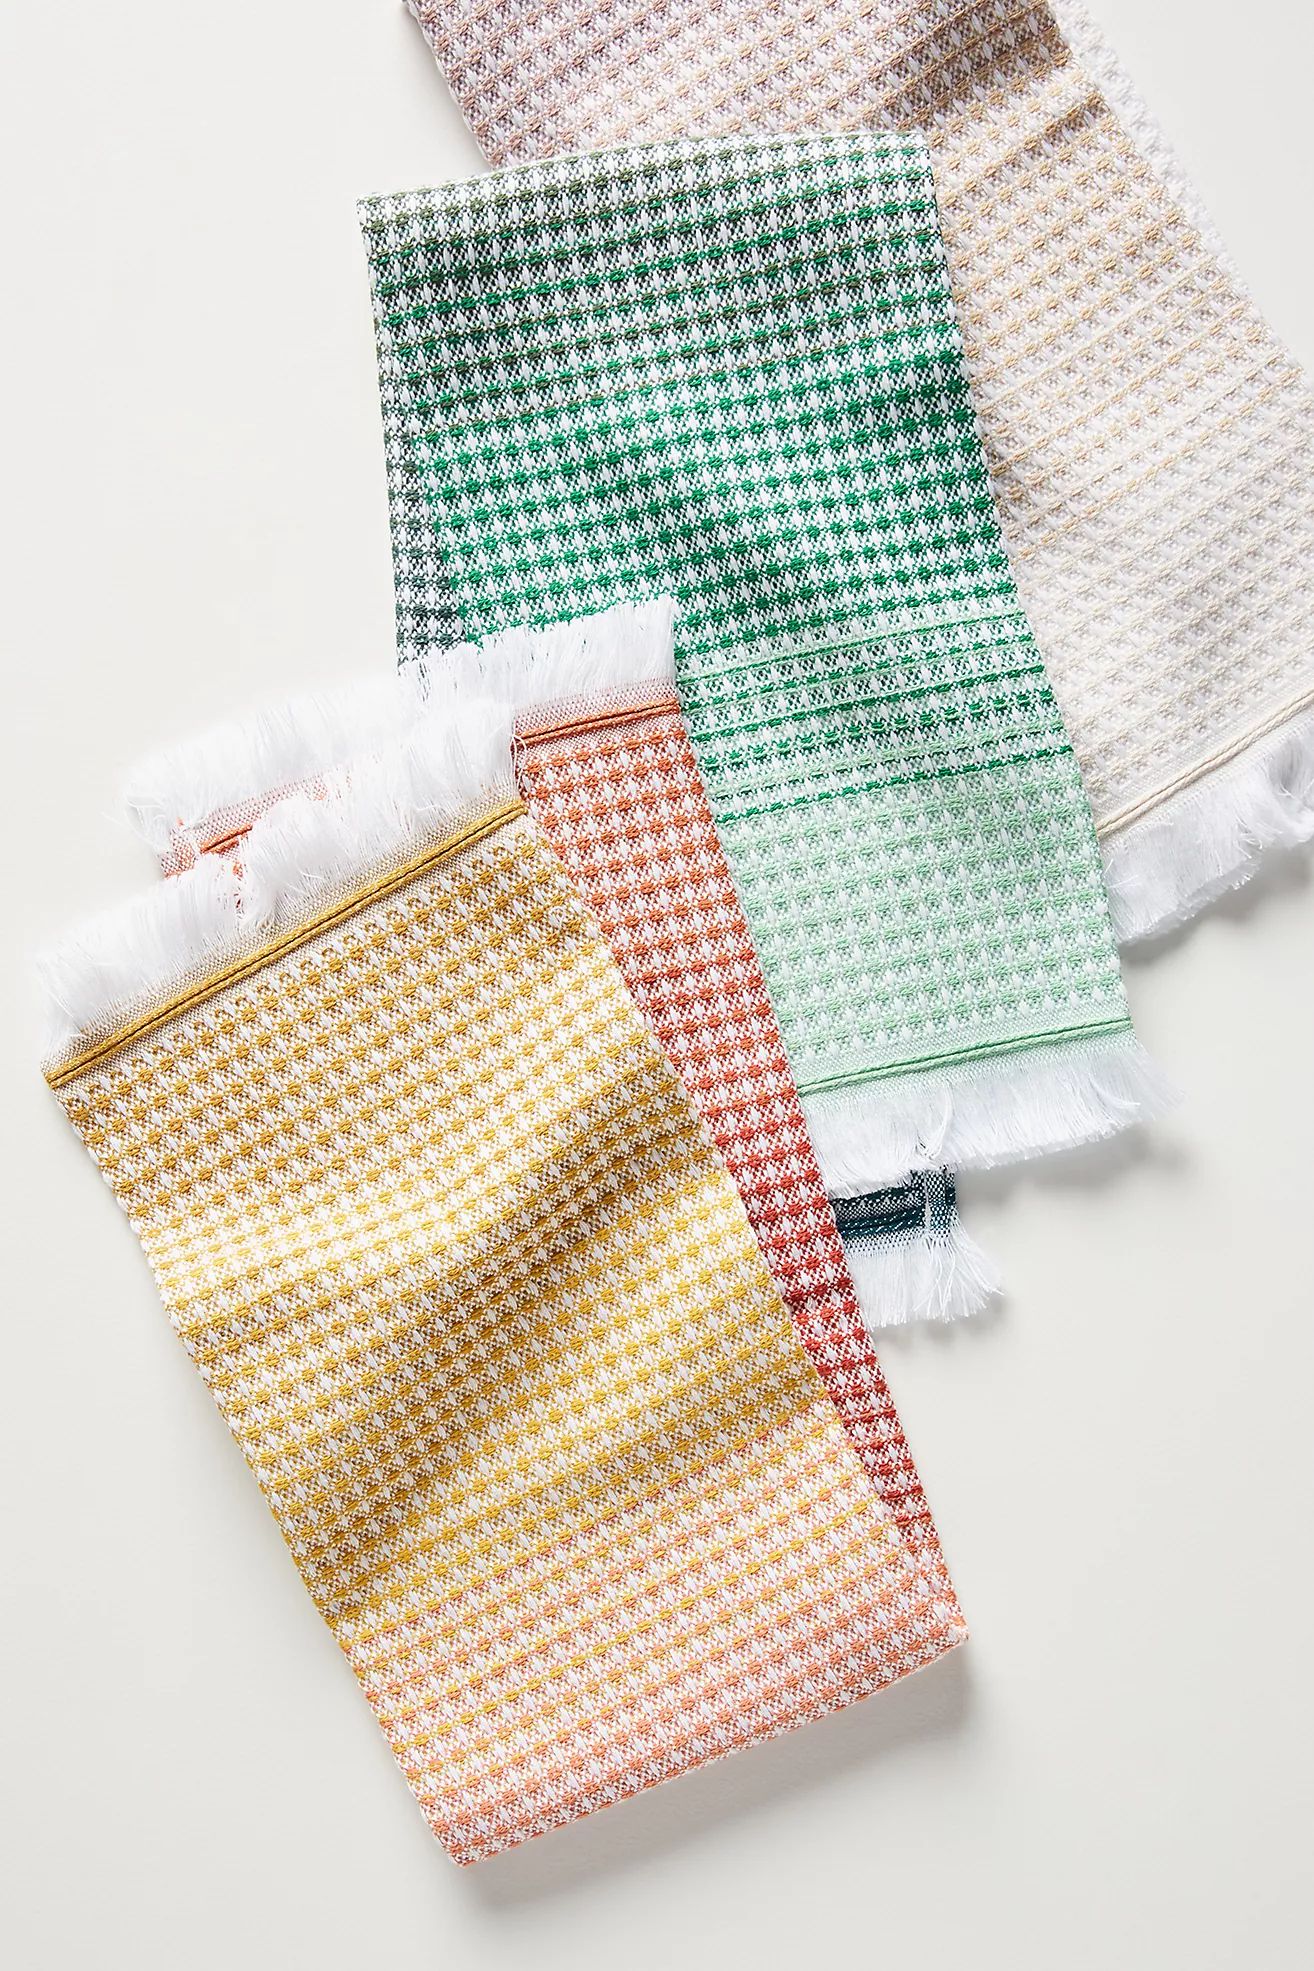 Lillian Dish Towels, Set of 3 | Anthropologie (US)